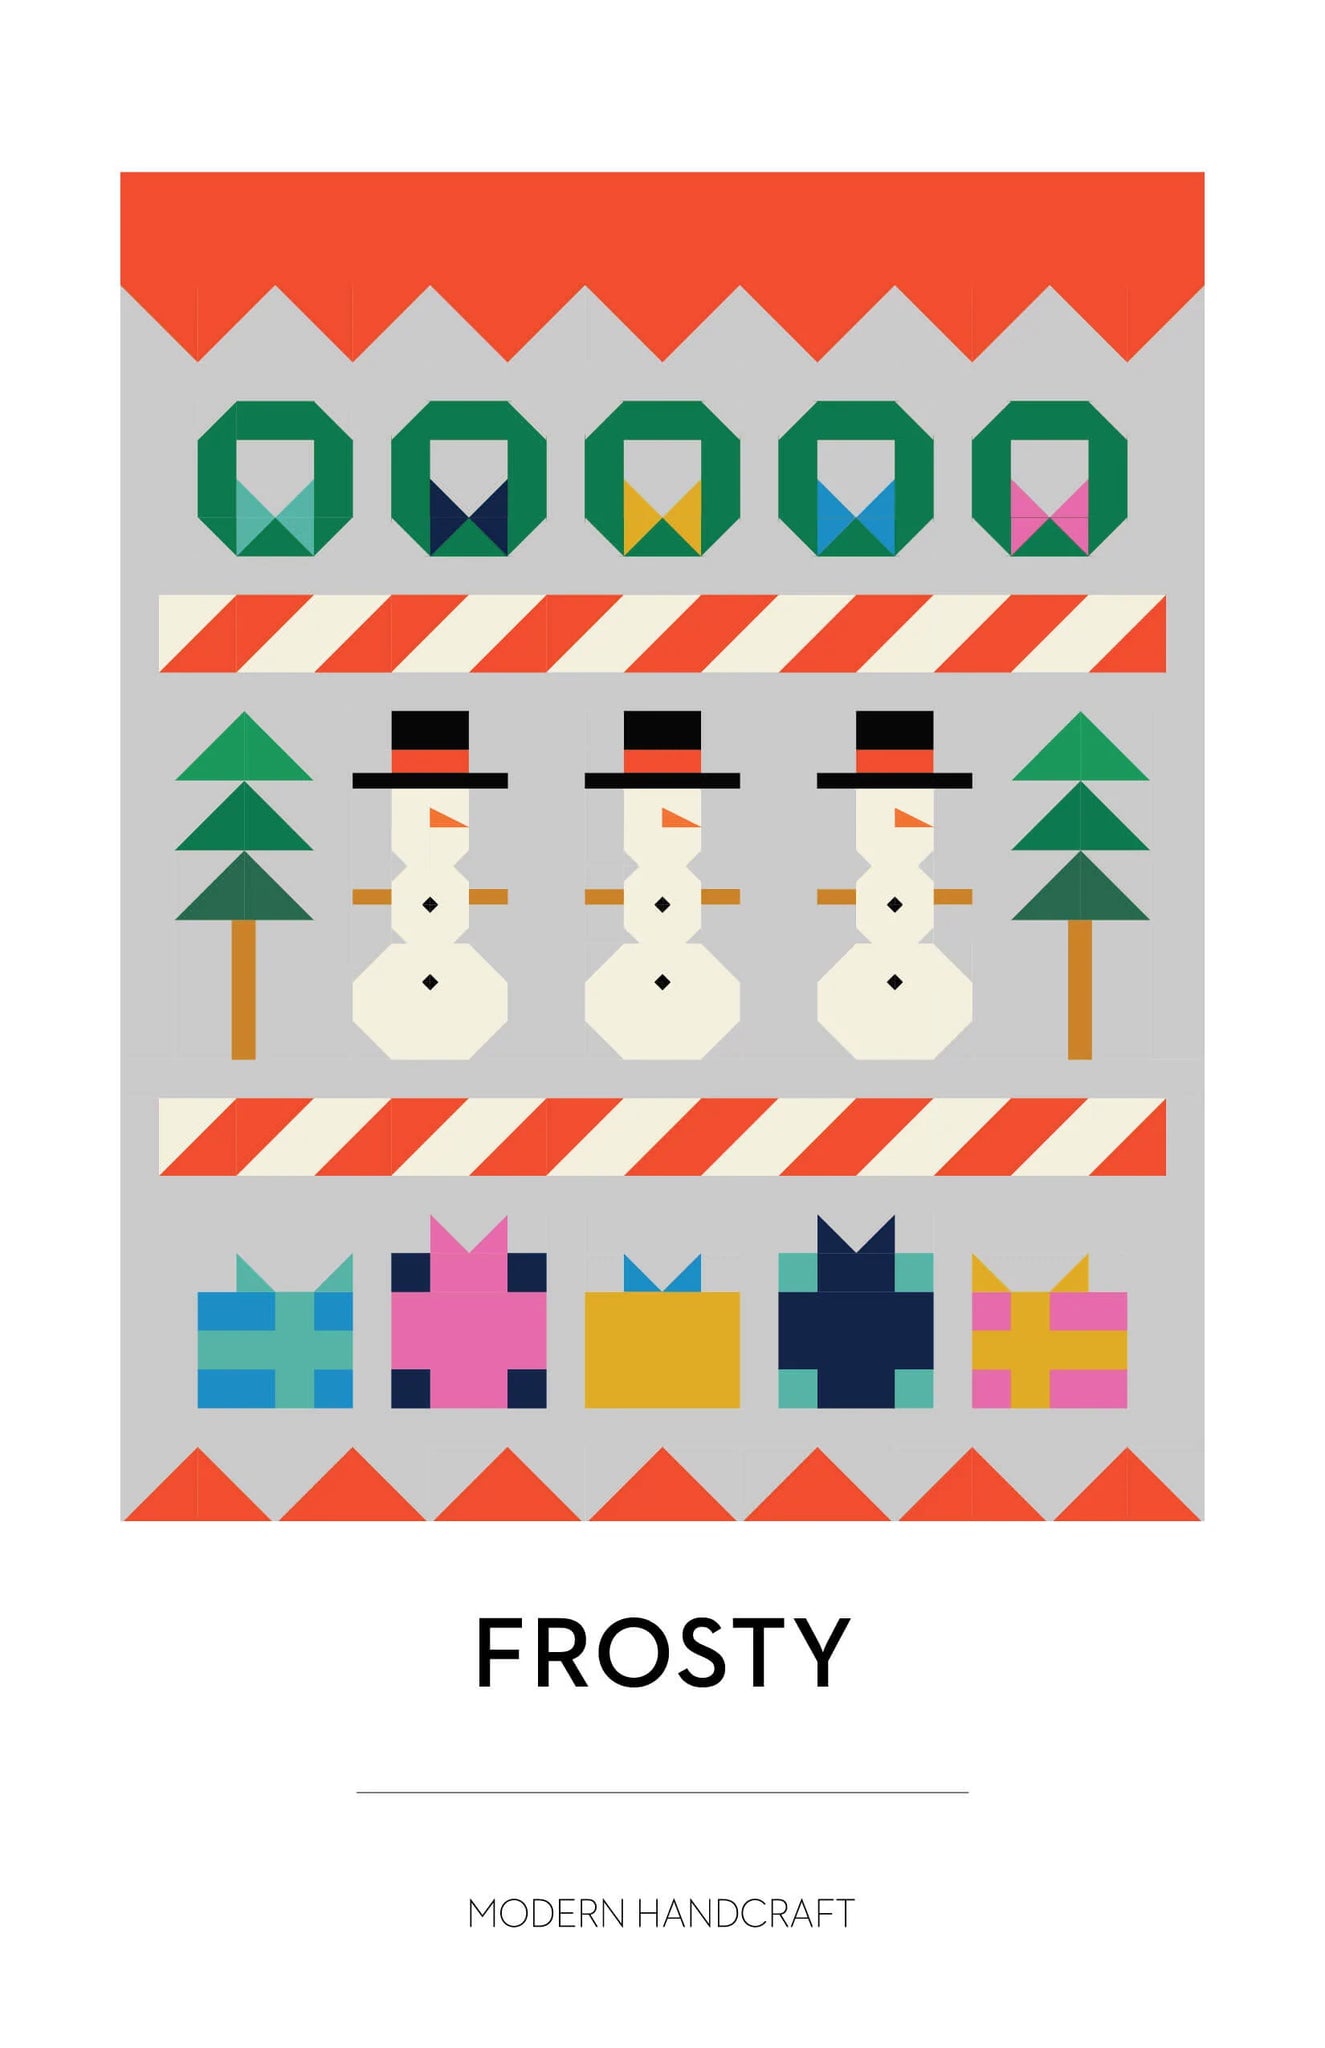 Frosty by Modern Handcraft